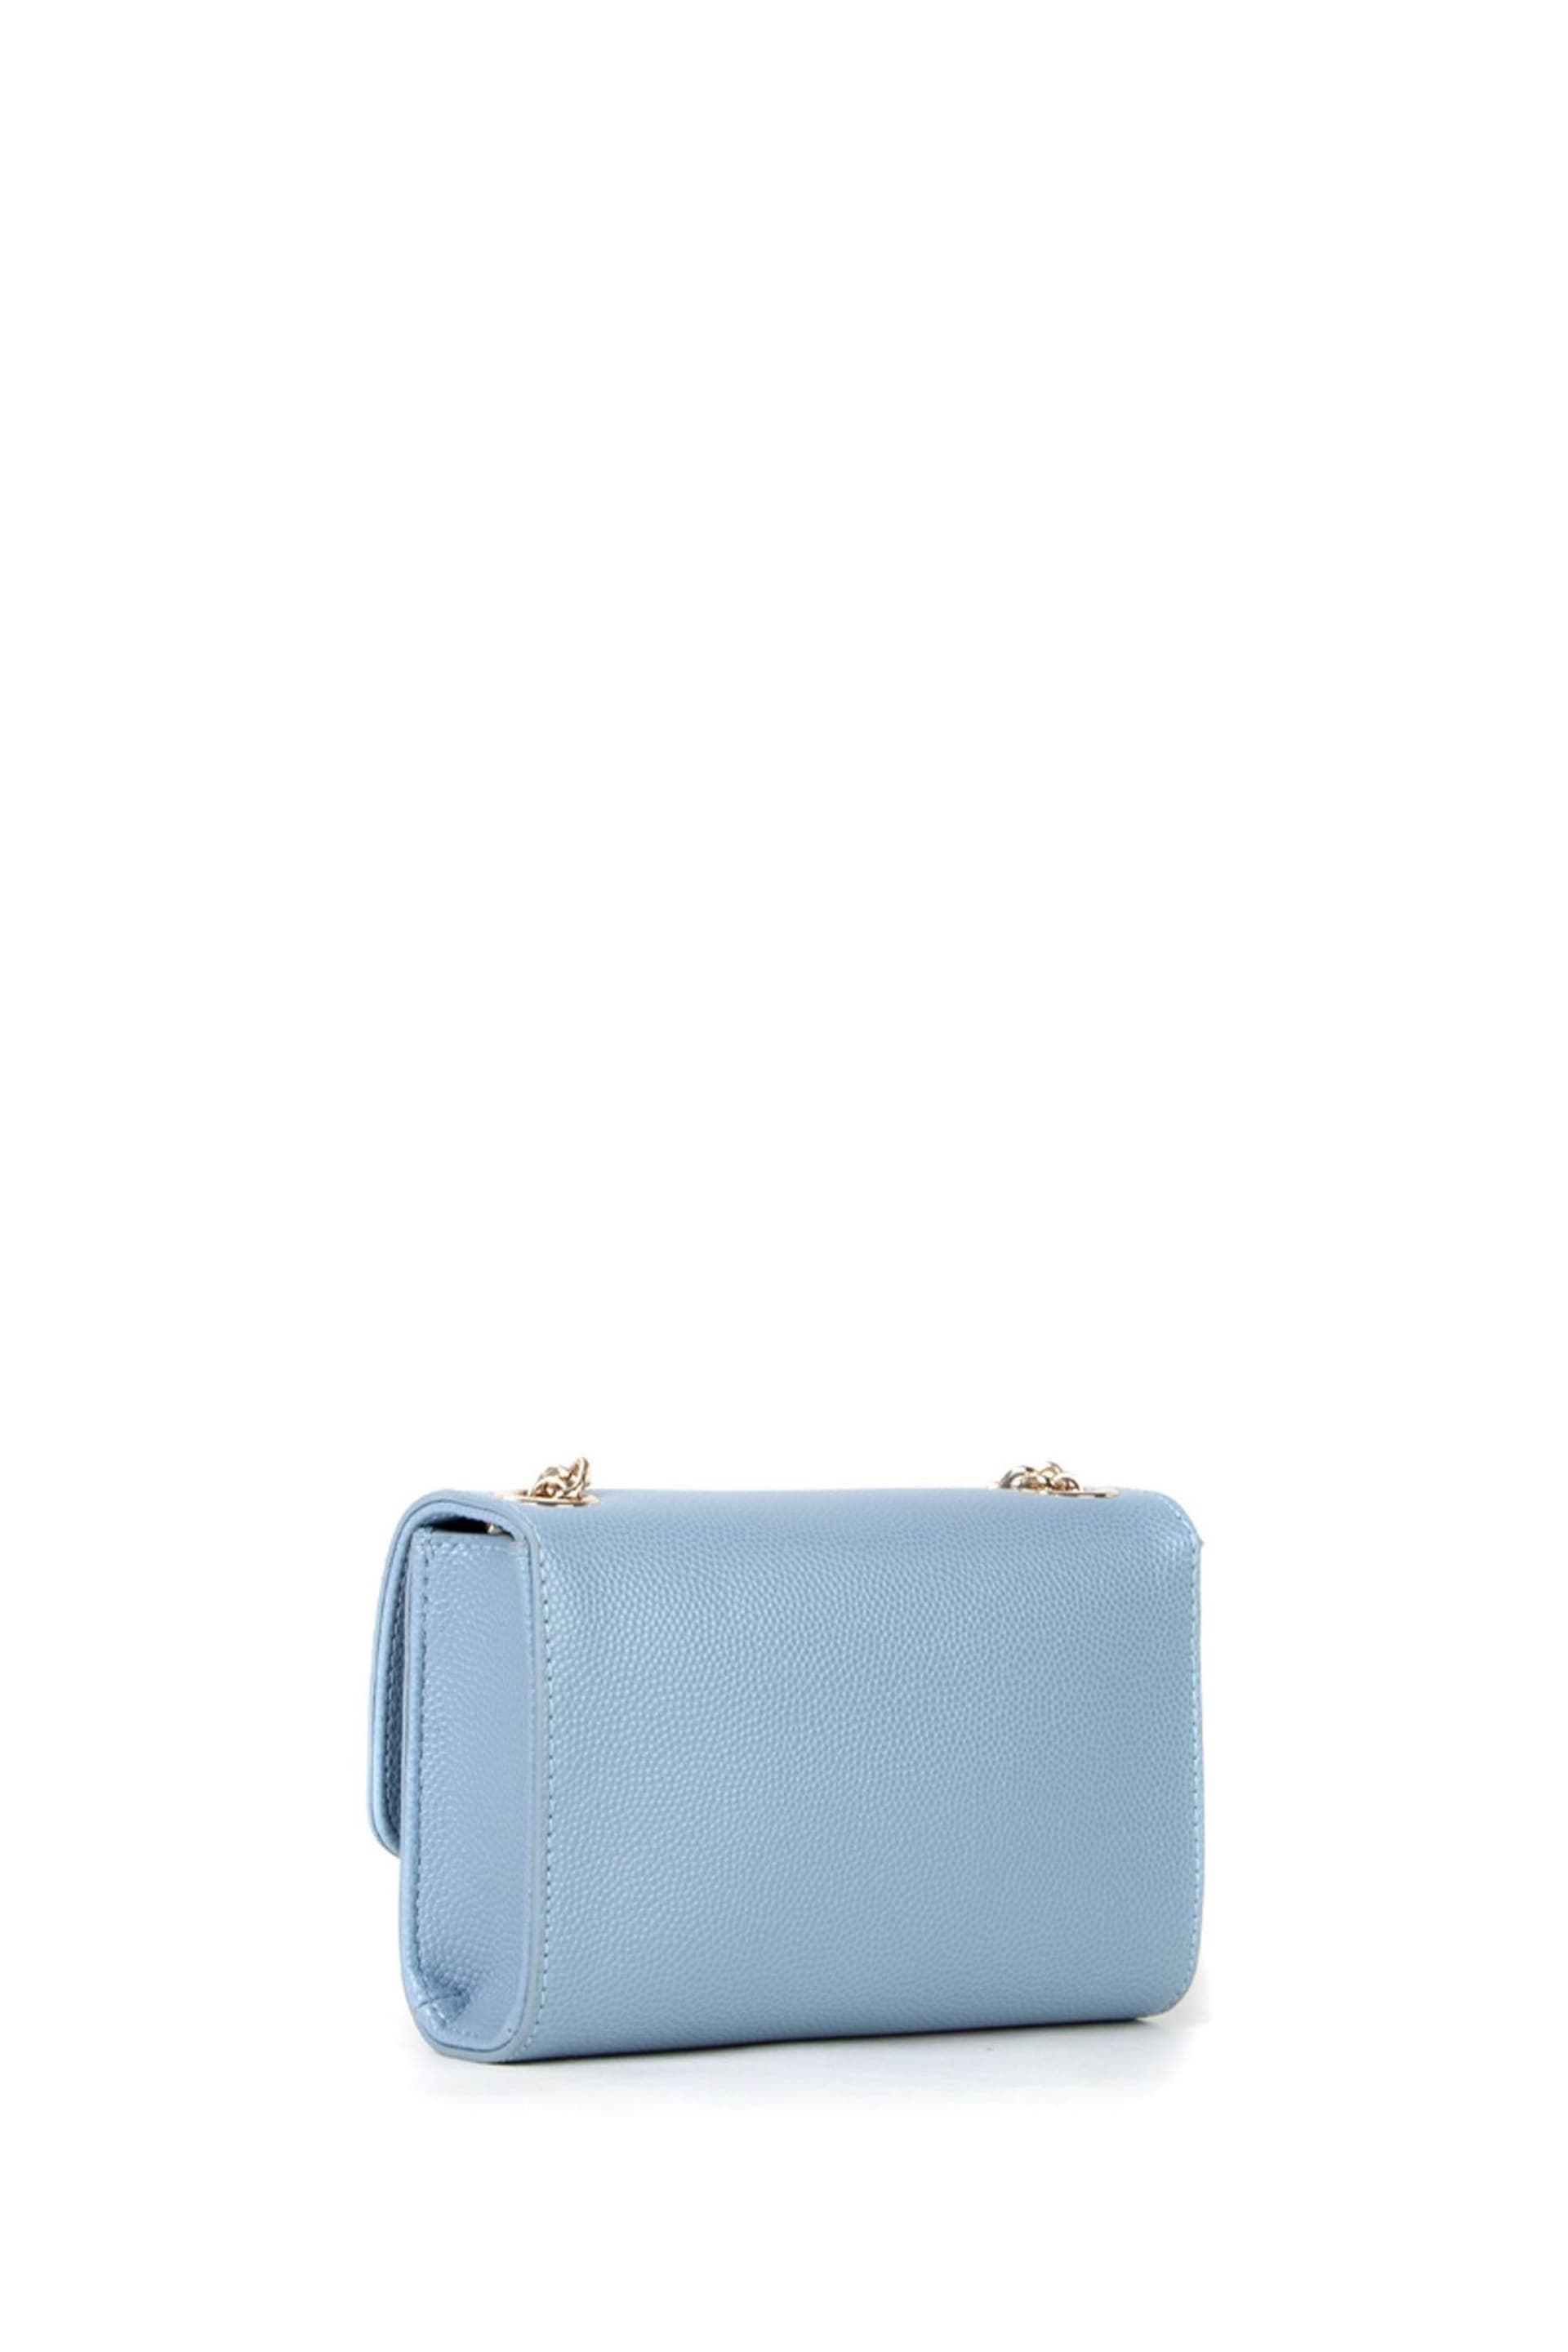 Valentino Bags Blue Divina tassel crossbody bag - Image 3 of 4